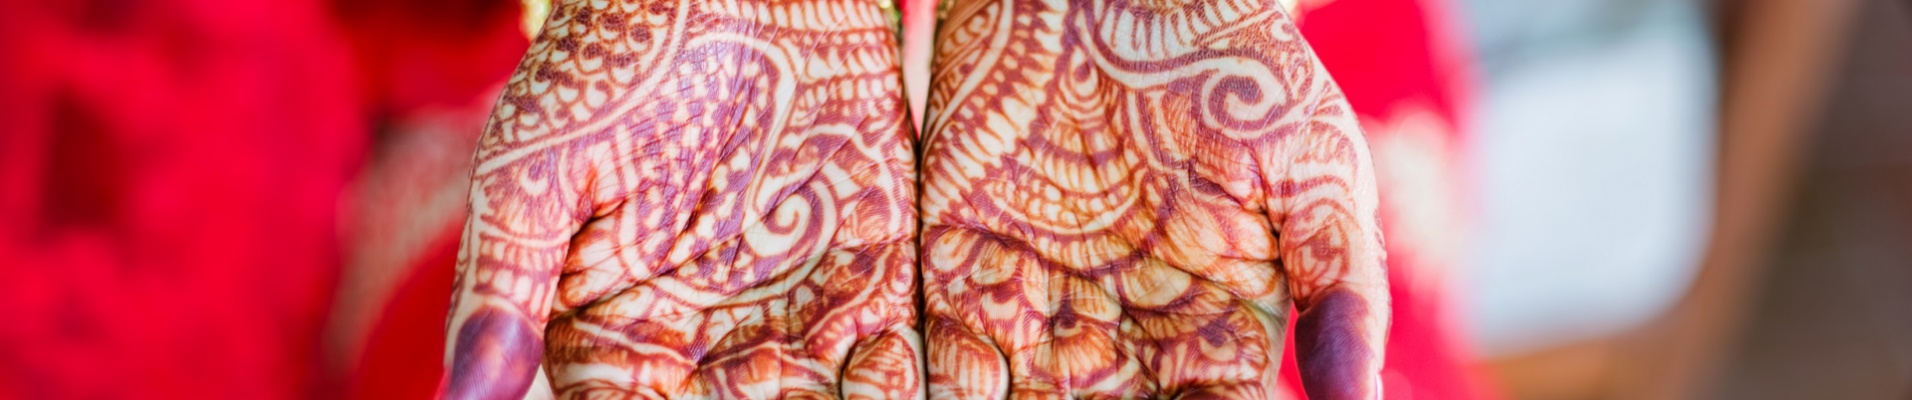 henna-signes- marriage